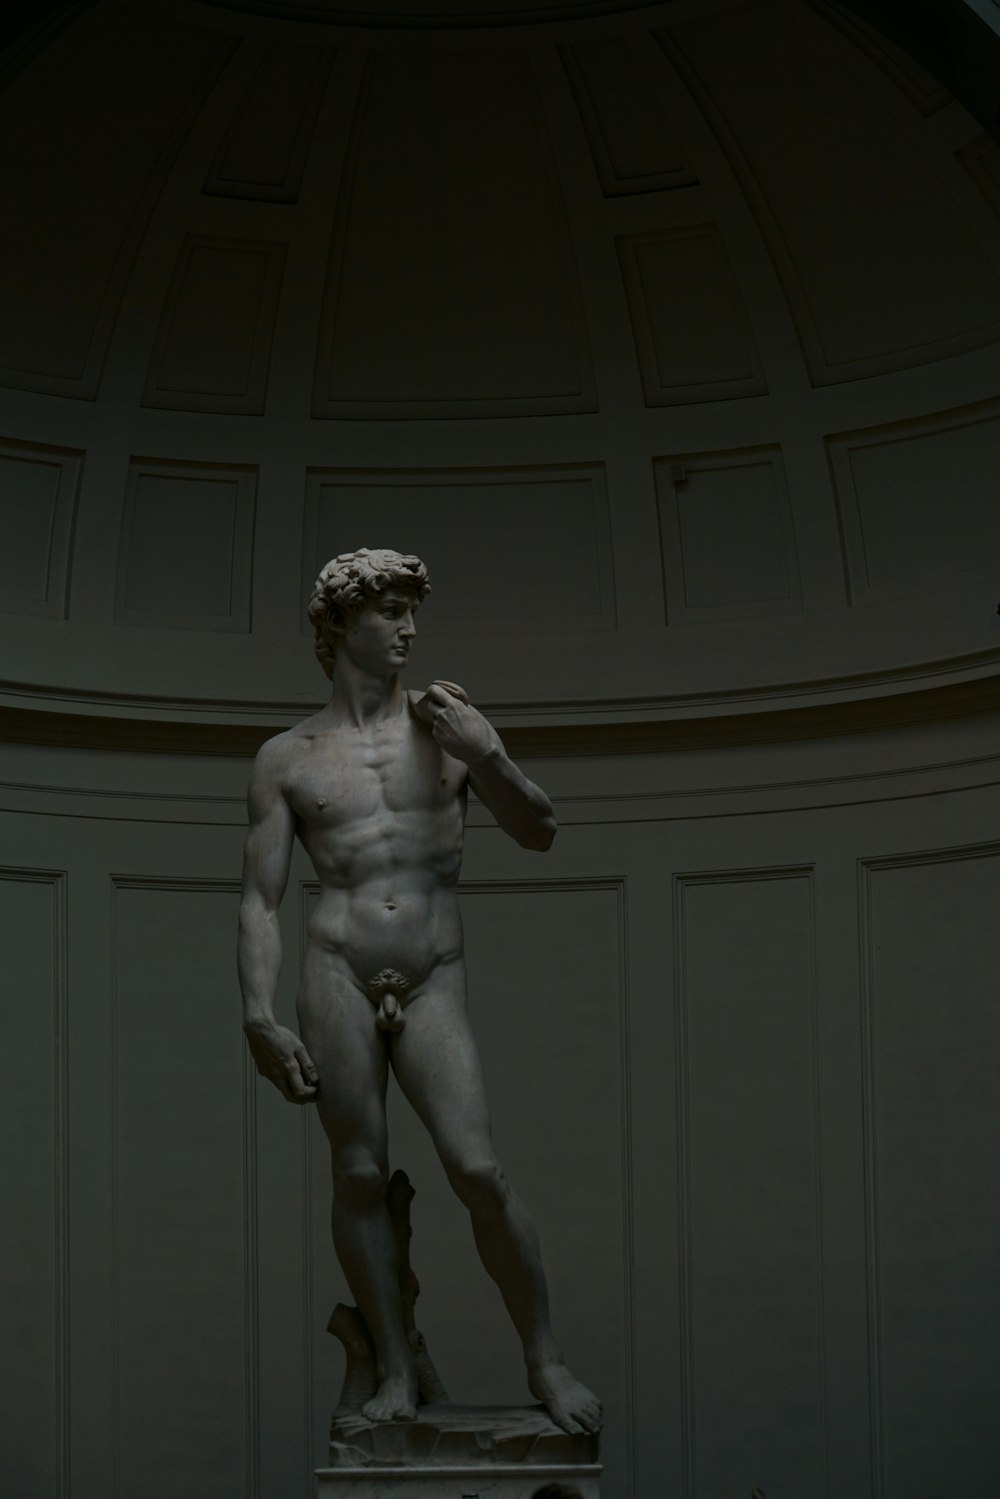 Una estatua de un hombre sin camisa